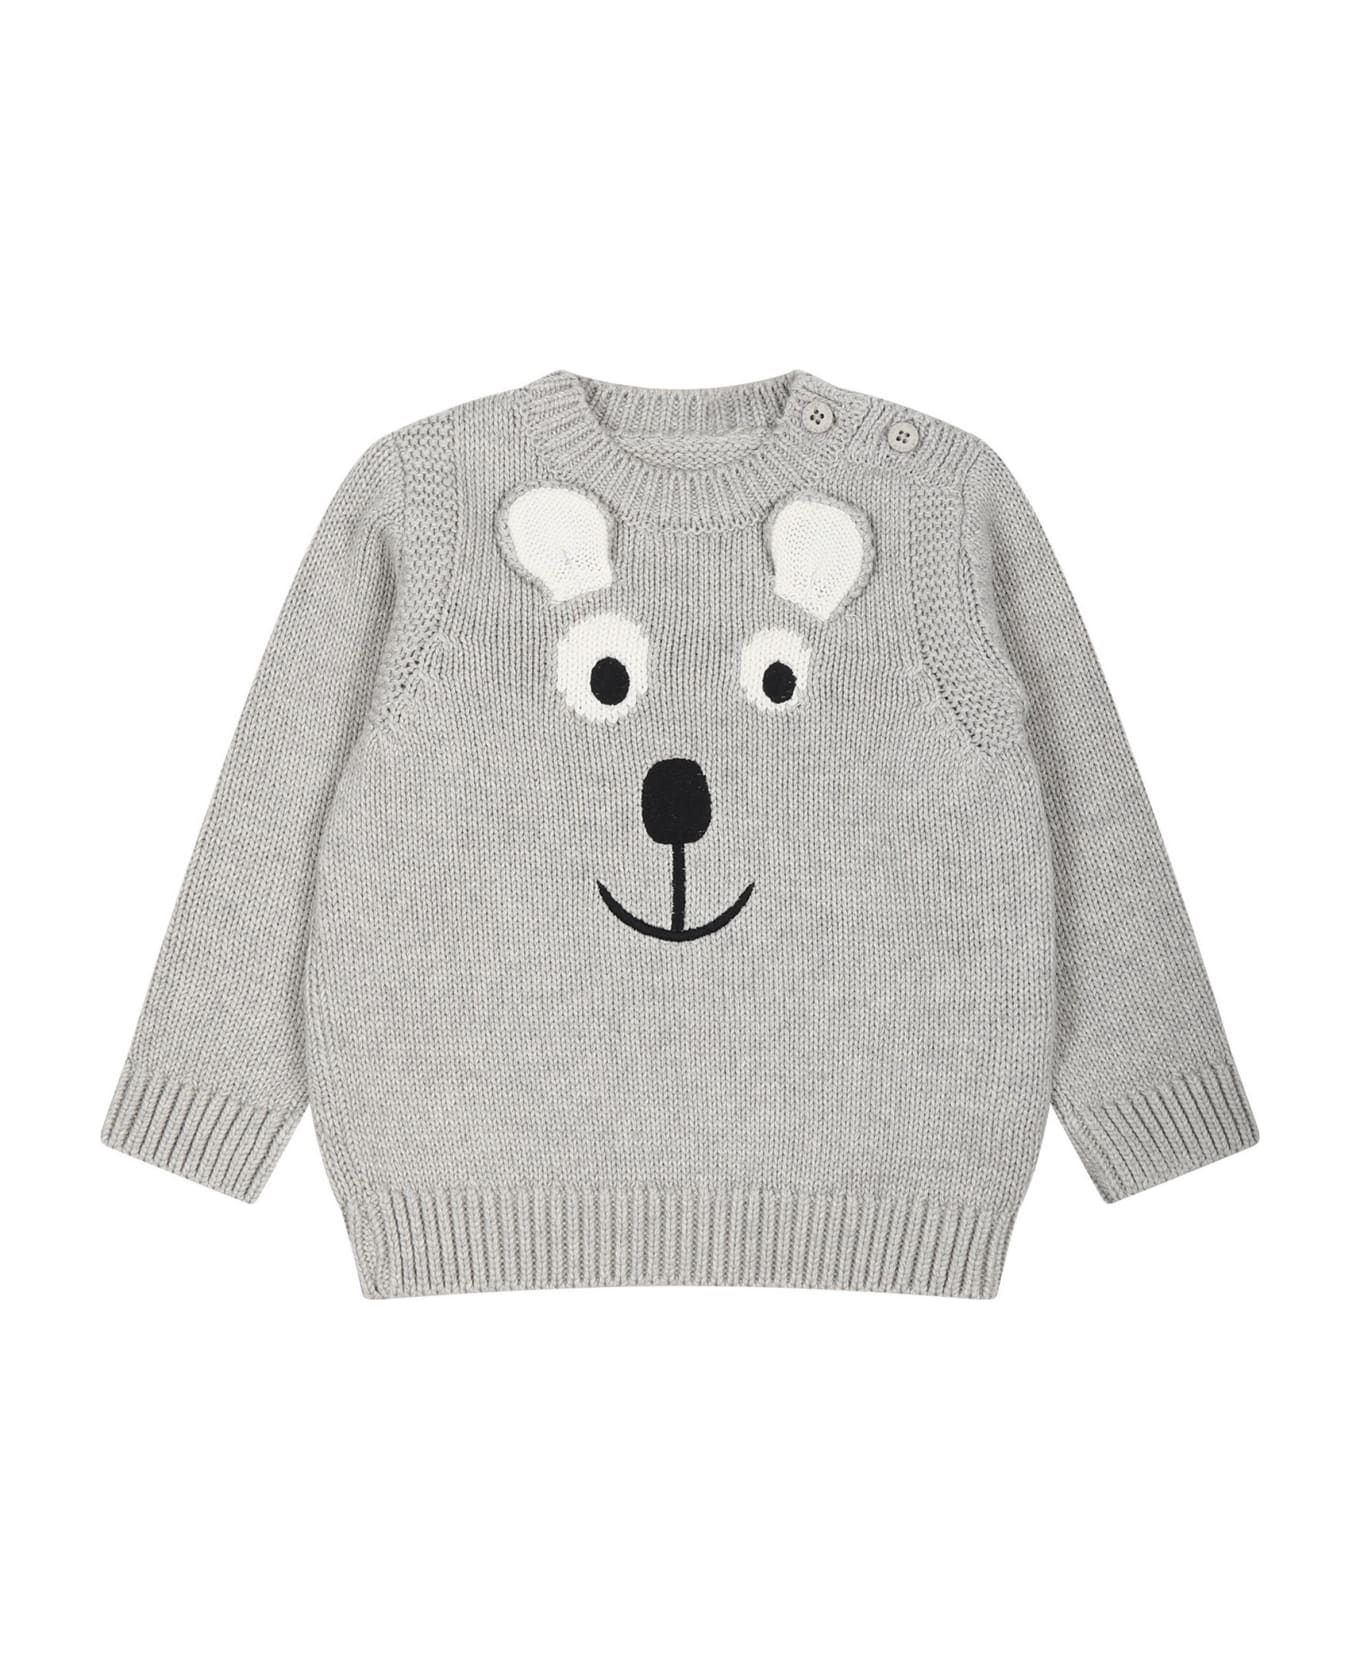 Stella McCartney Kids Grey Sweater For Baby Boy - Grey